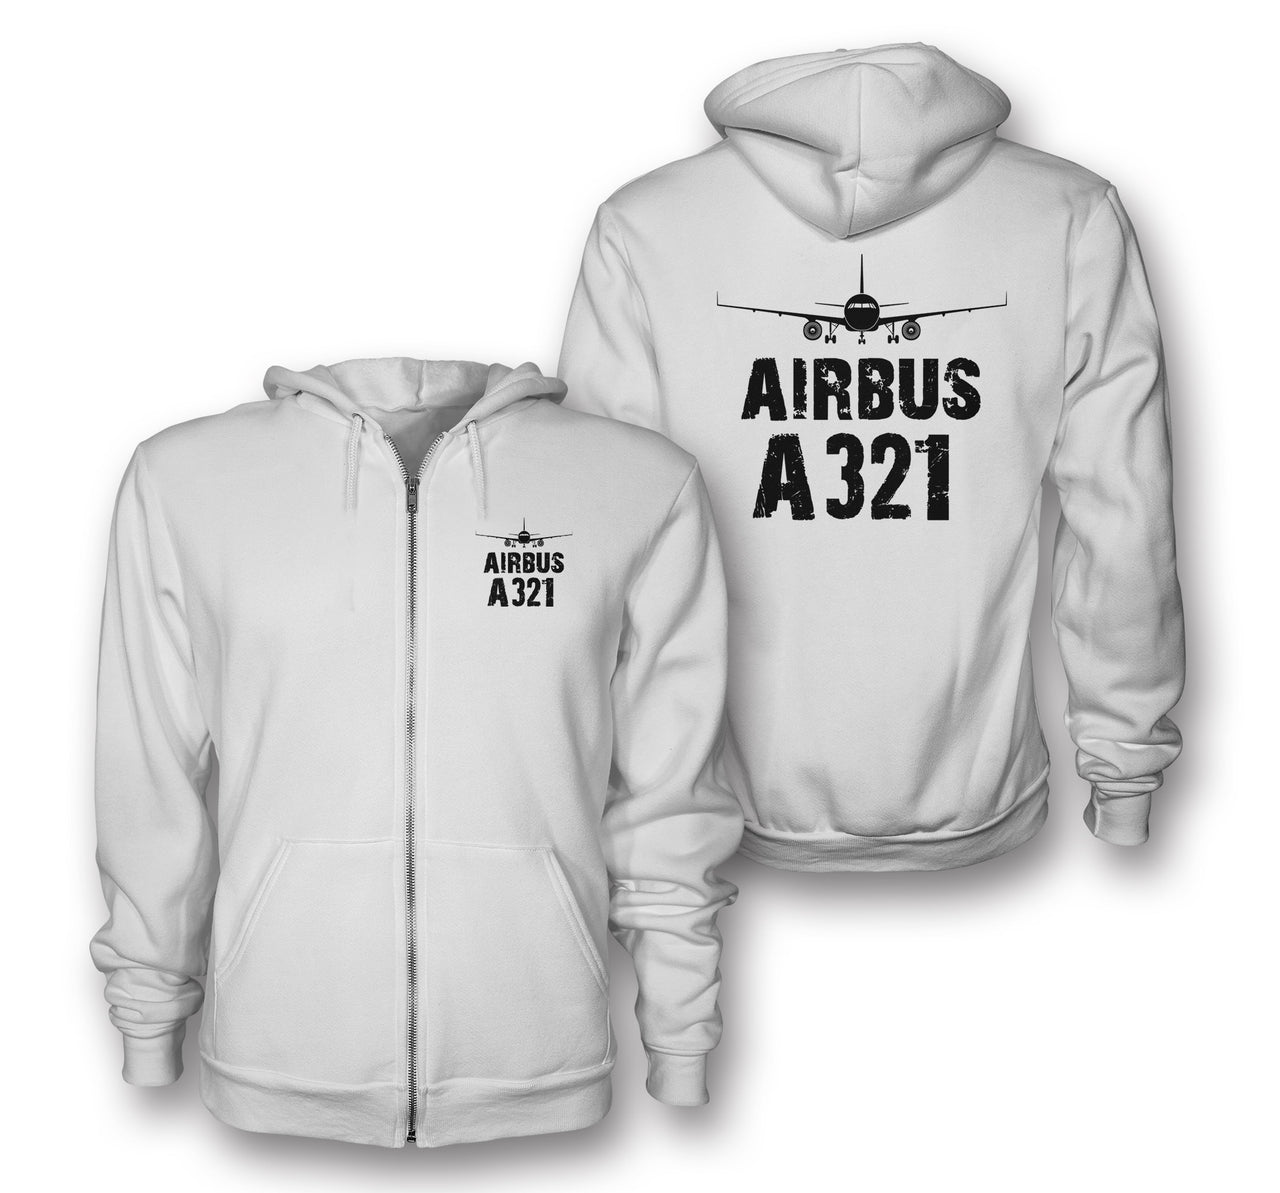 Airbus A321 & Plane Designed Zipped Hoodies